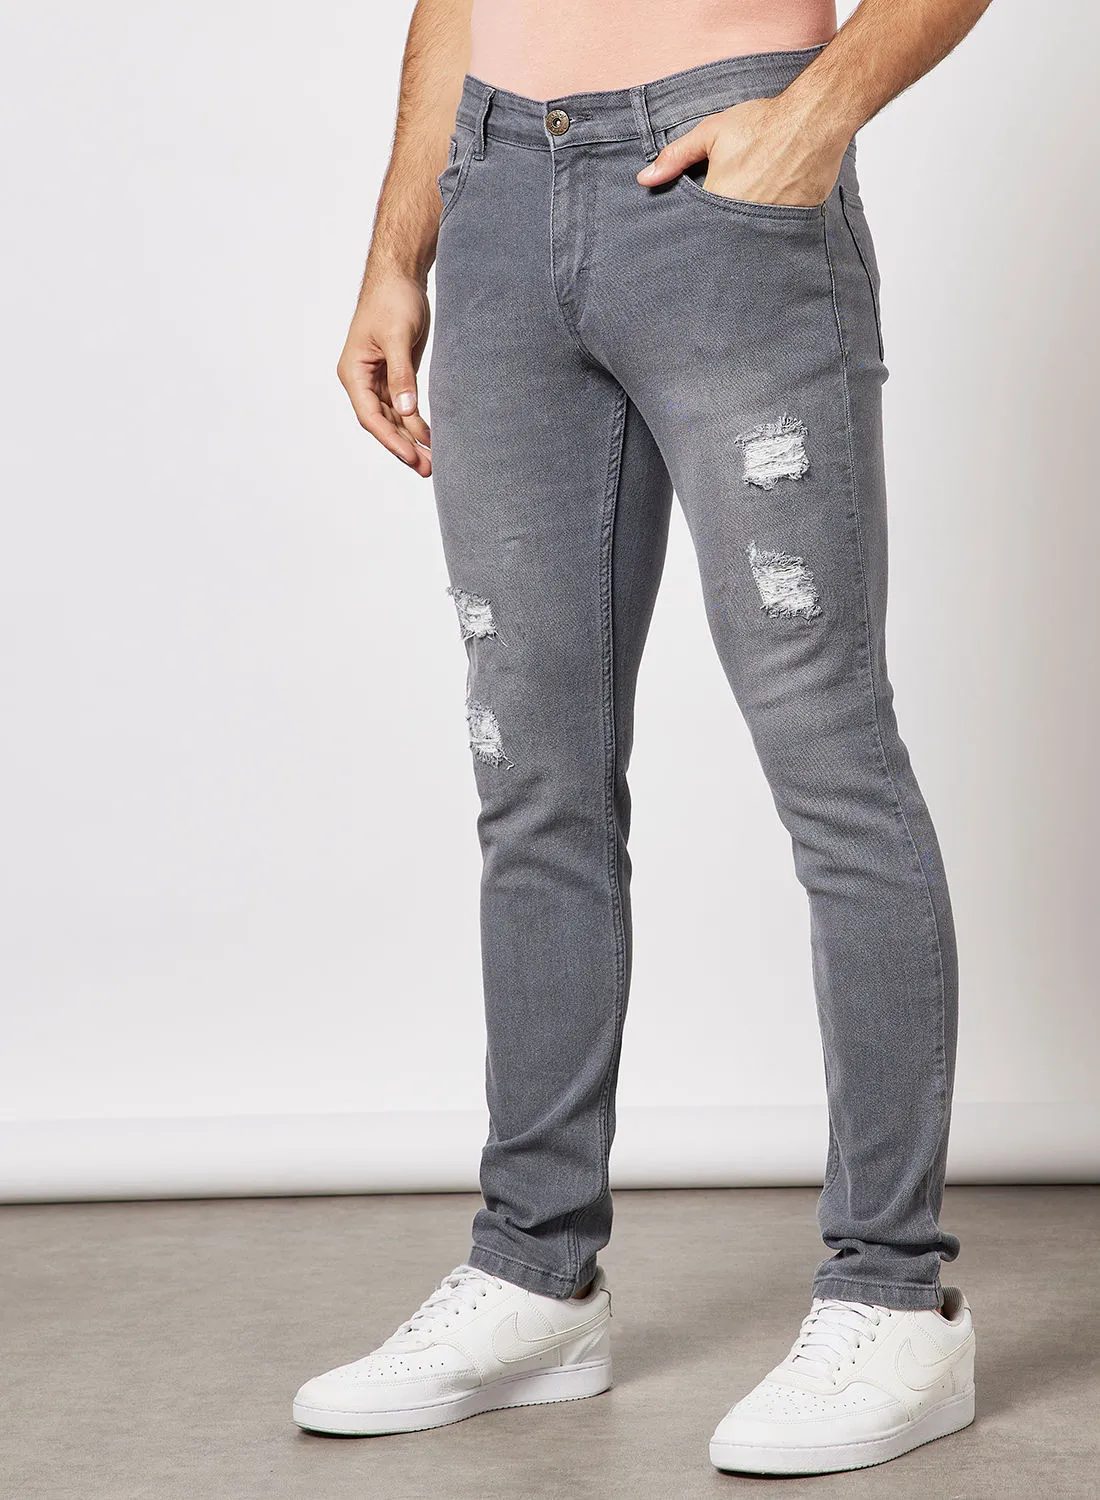 ABOF Slim Fit Jeans Grey Wash